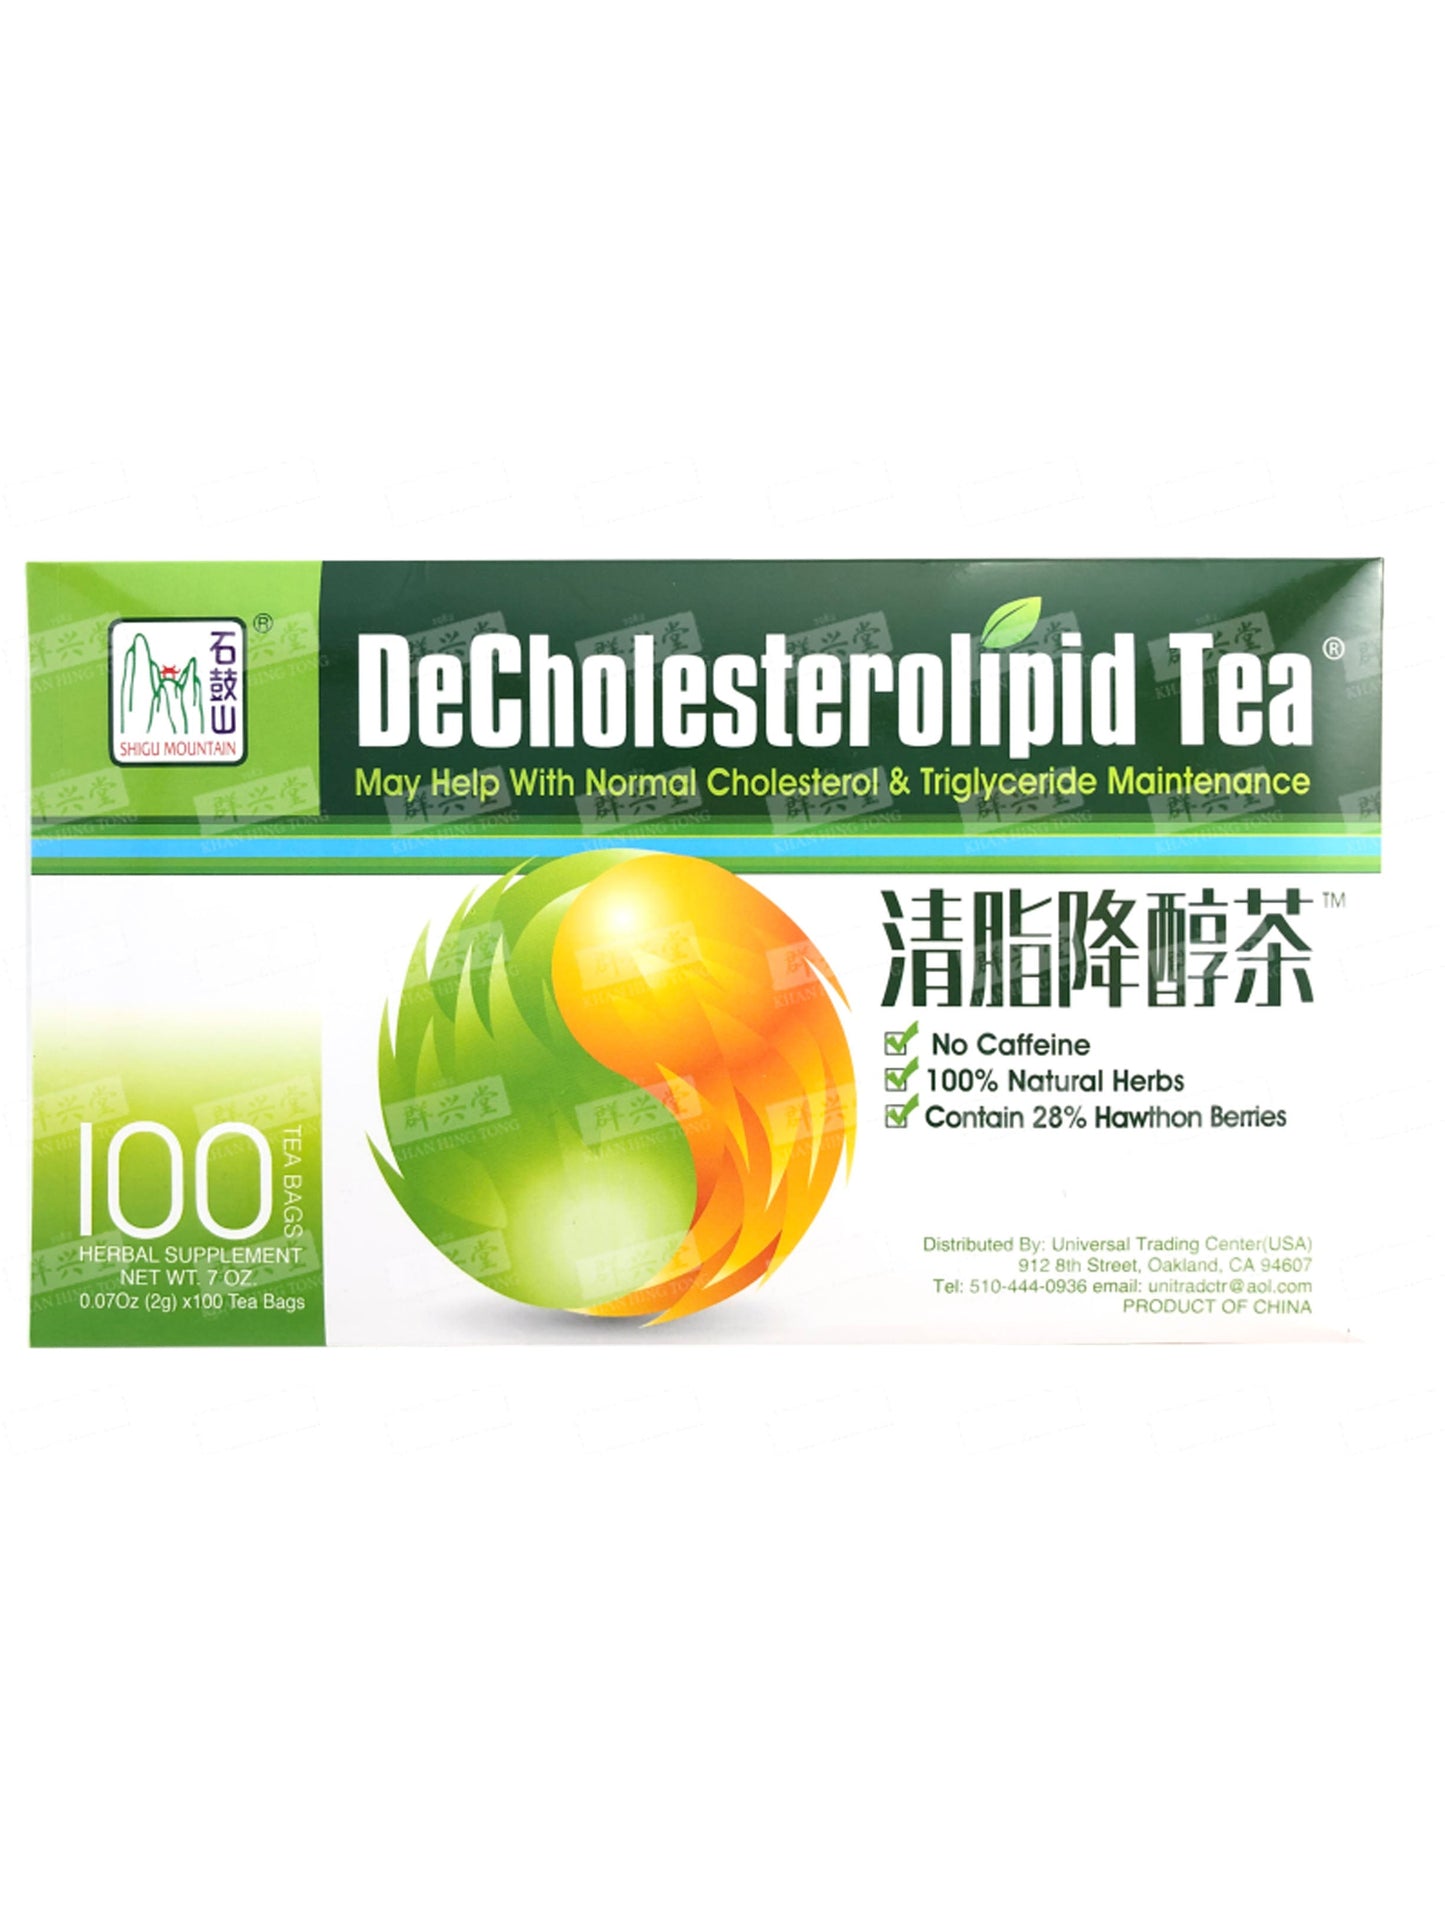 SHIGU MOUNTAIN DeCholesterolipid Tea 清脂降醇茶